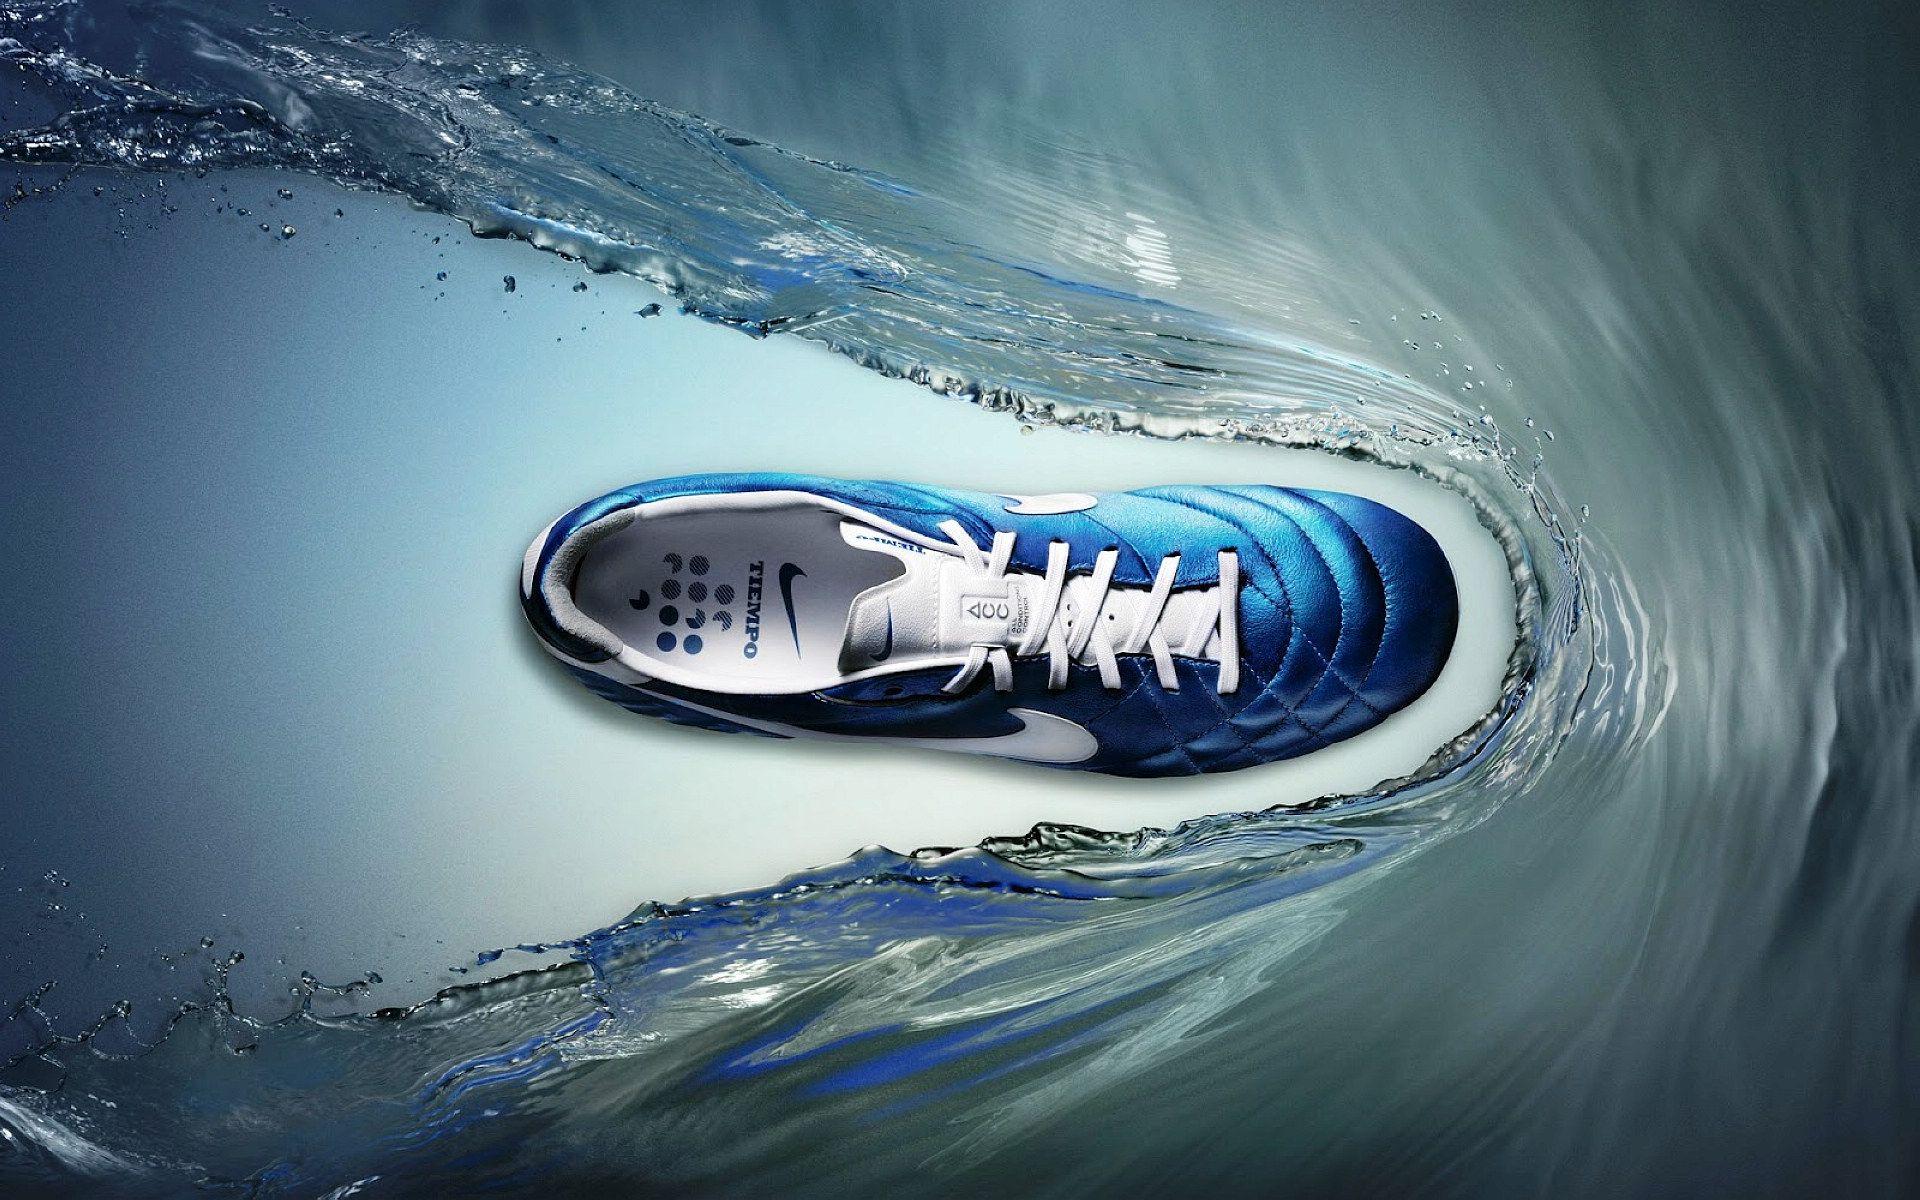 Найк море. Бутсы conditions Control Nike. Реклама кроссовок Nike. Креативная реклама кроссовок. Реклама кроссовок найк.